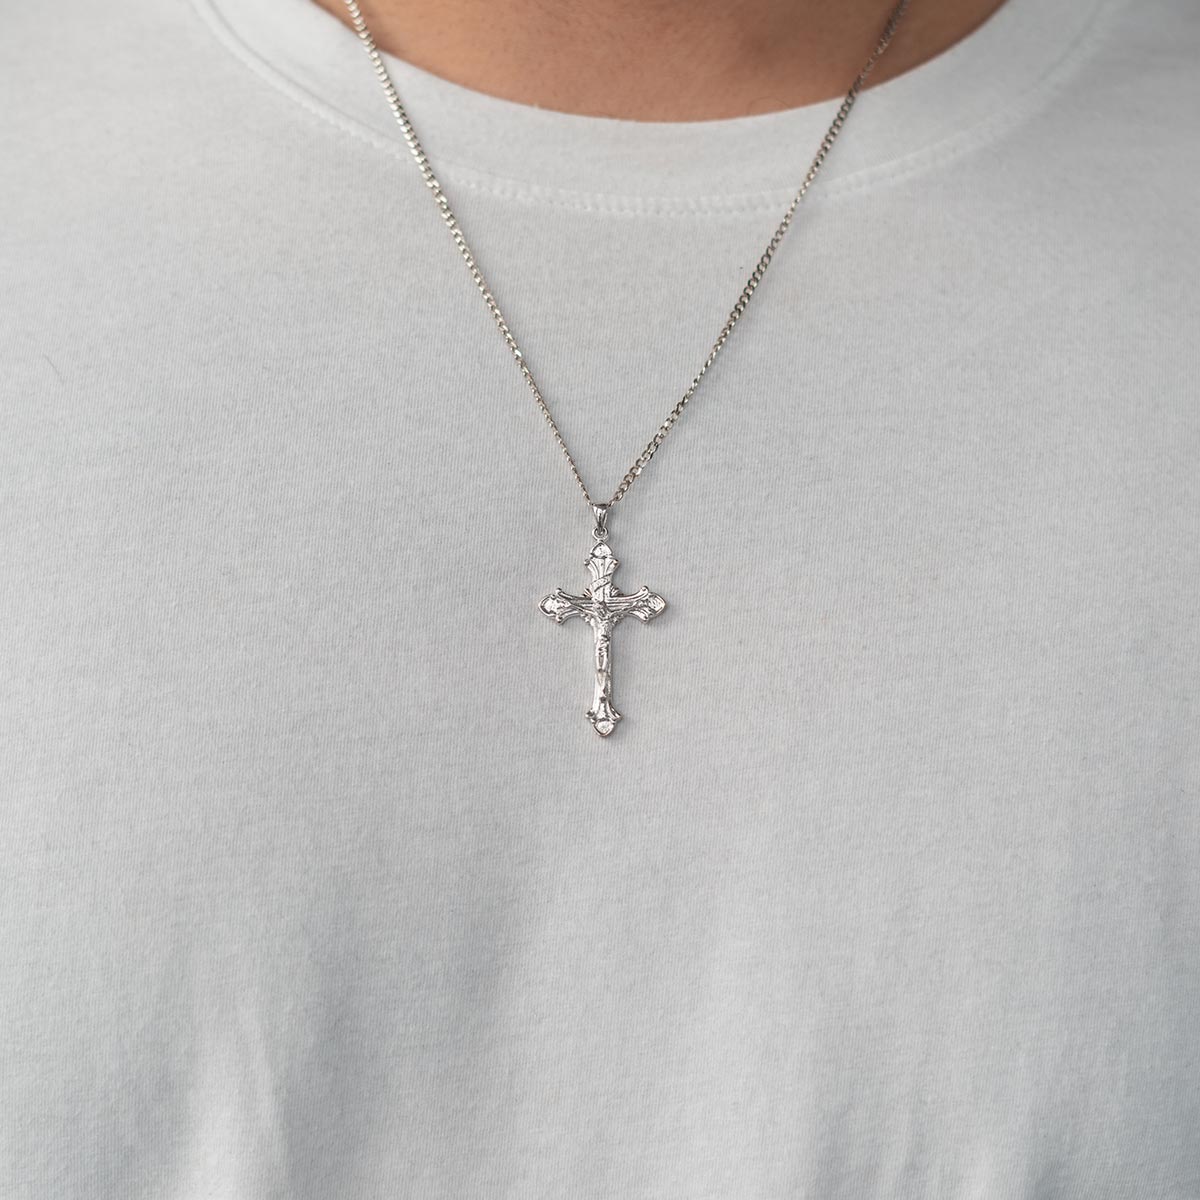 Men's Stylized Cross Necklace